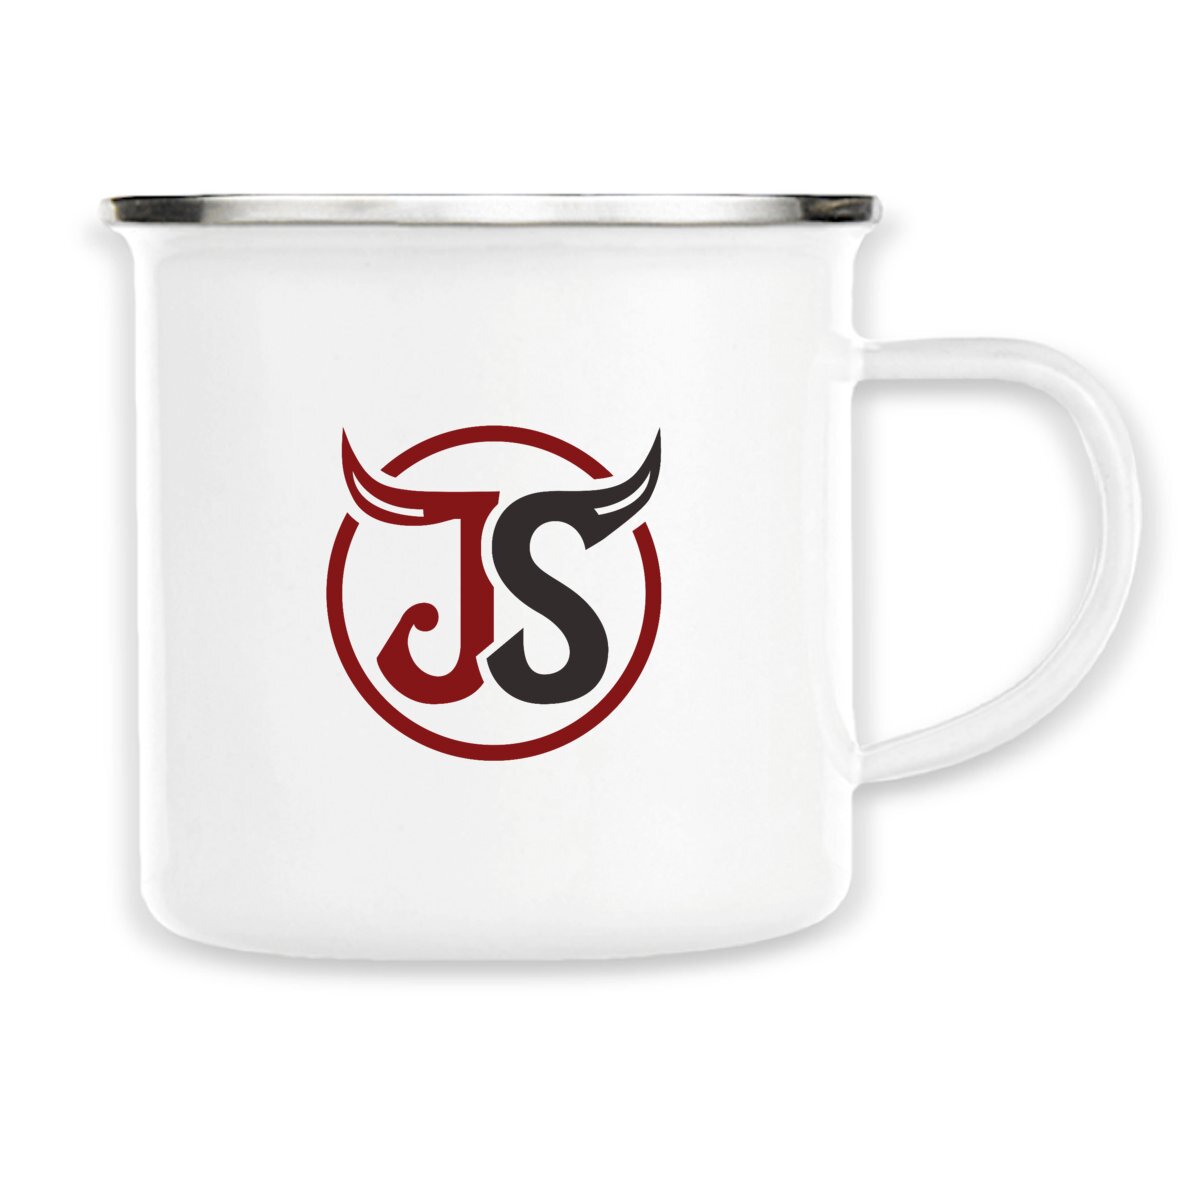 JS Enamel Mug